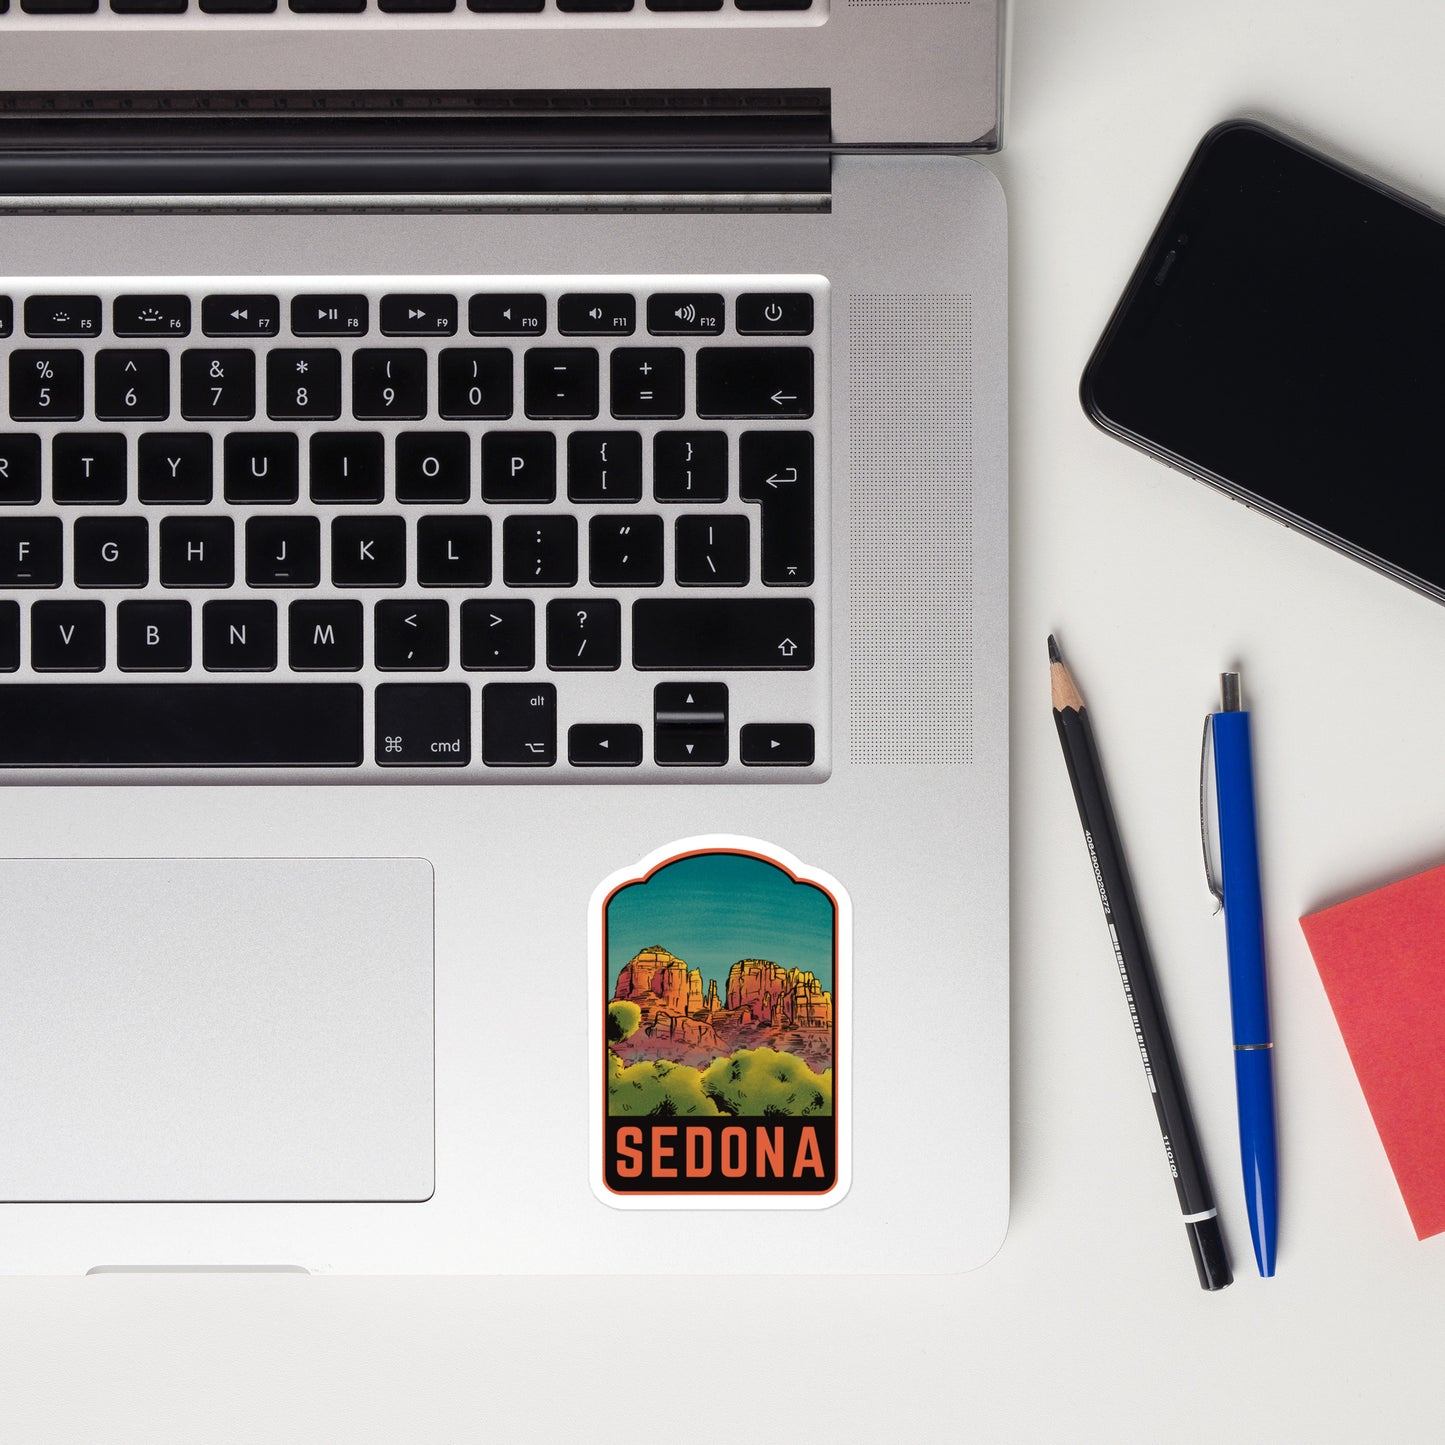 A sticker of Sedona Arizona on a laptop